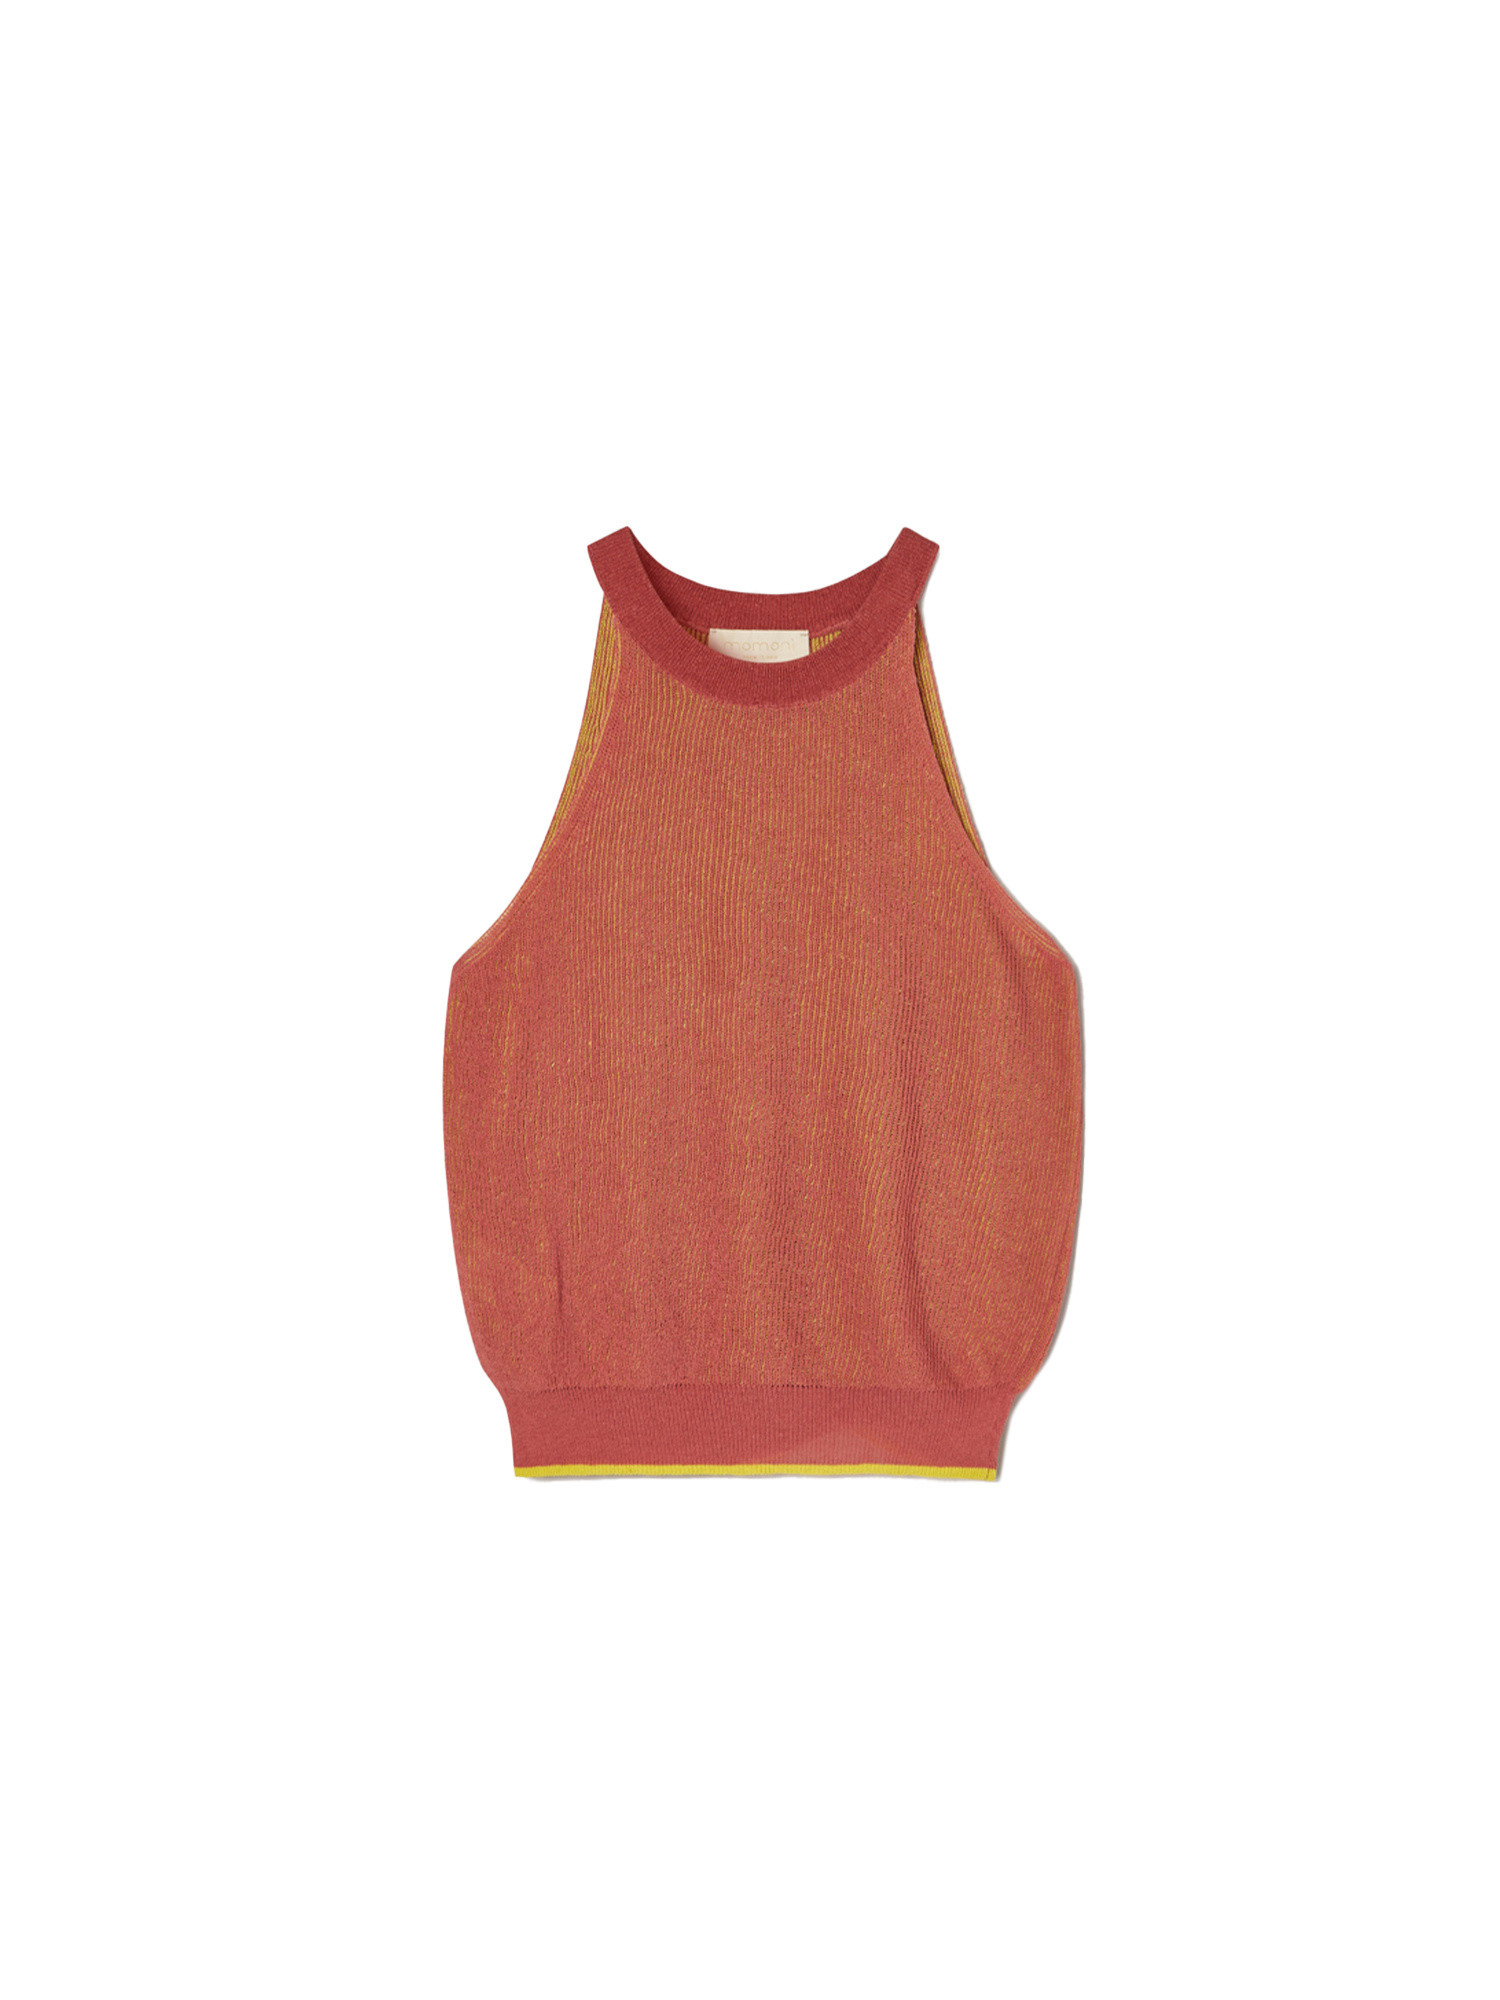 Momonì - Cary vanisé linen top, Dark Orange, large image number 0